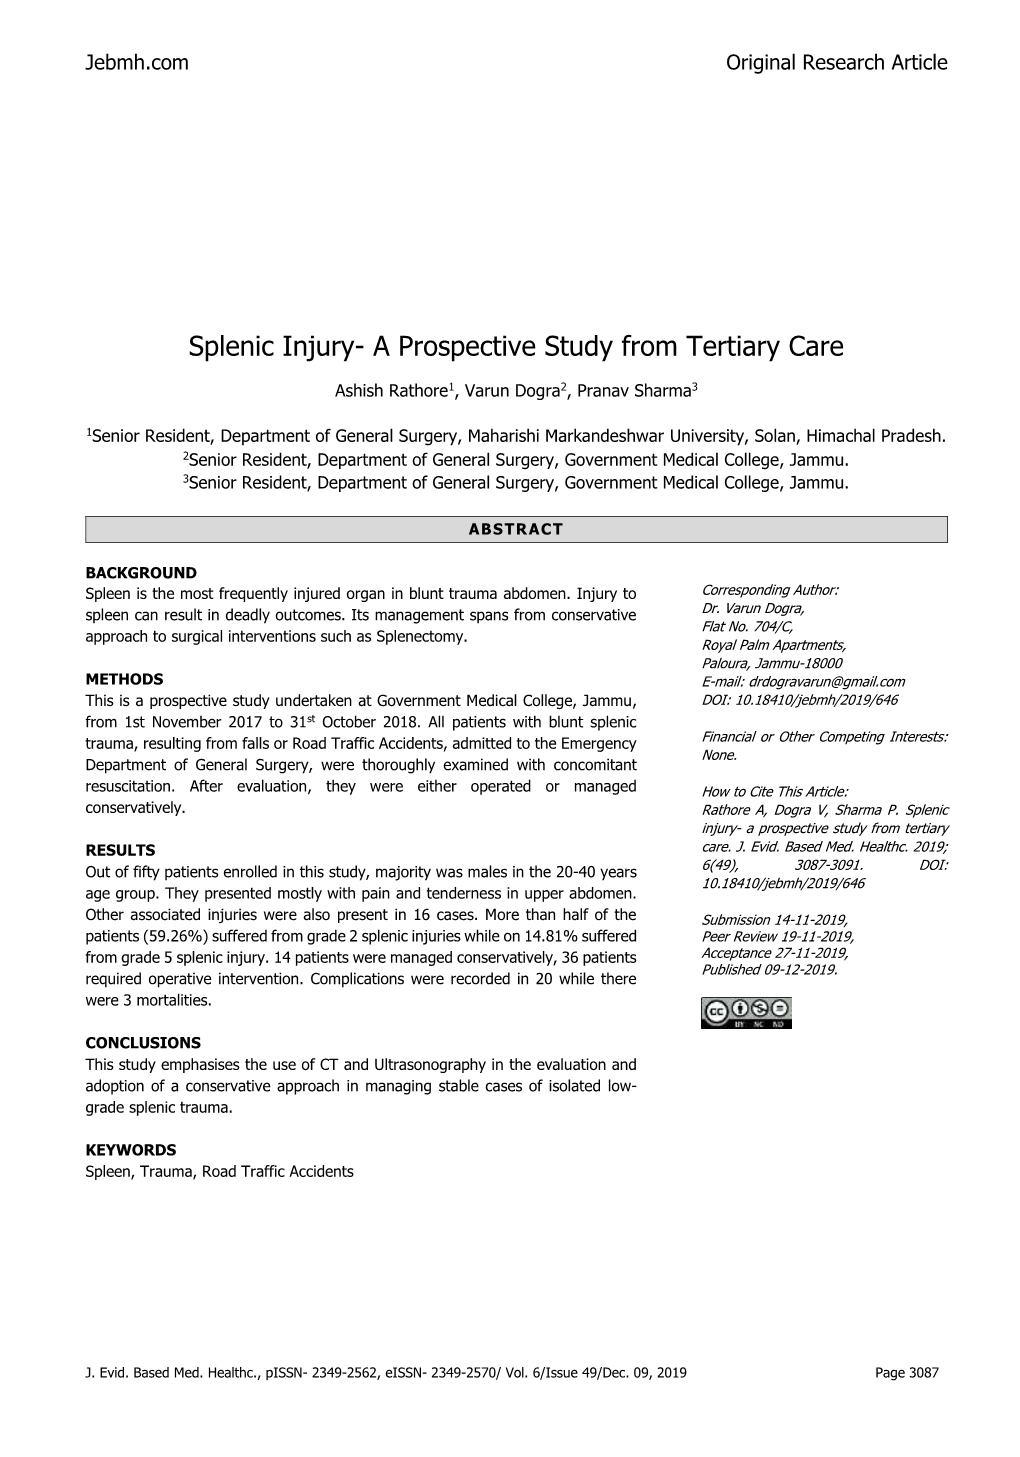 Splenic Injury- a Prospective Study from Tertiary Care